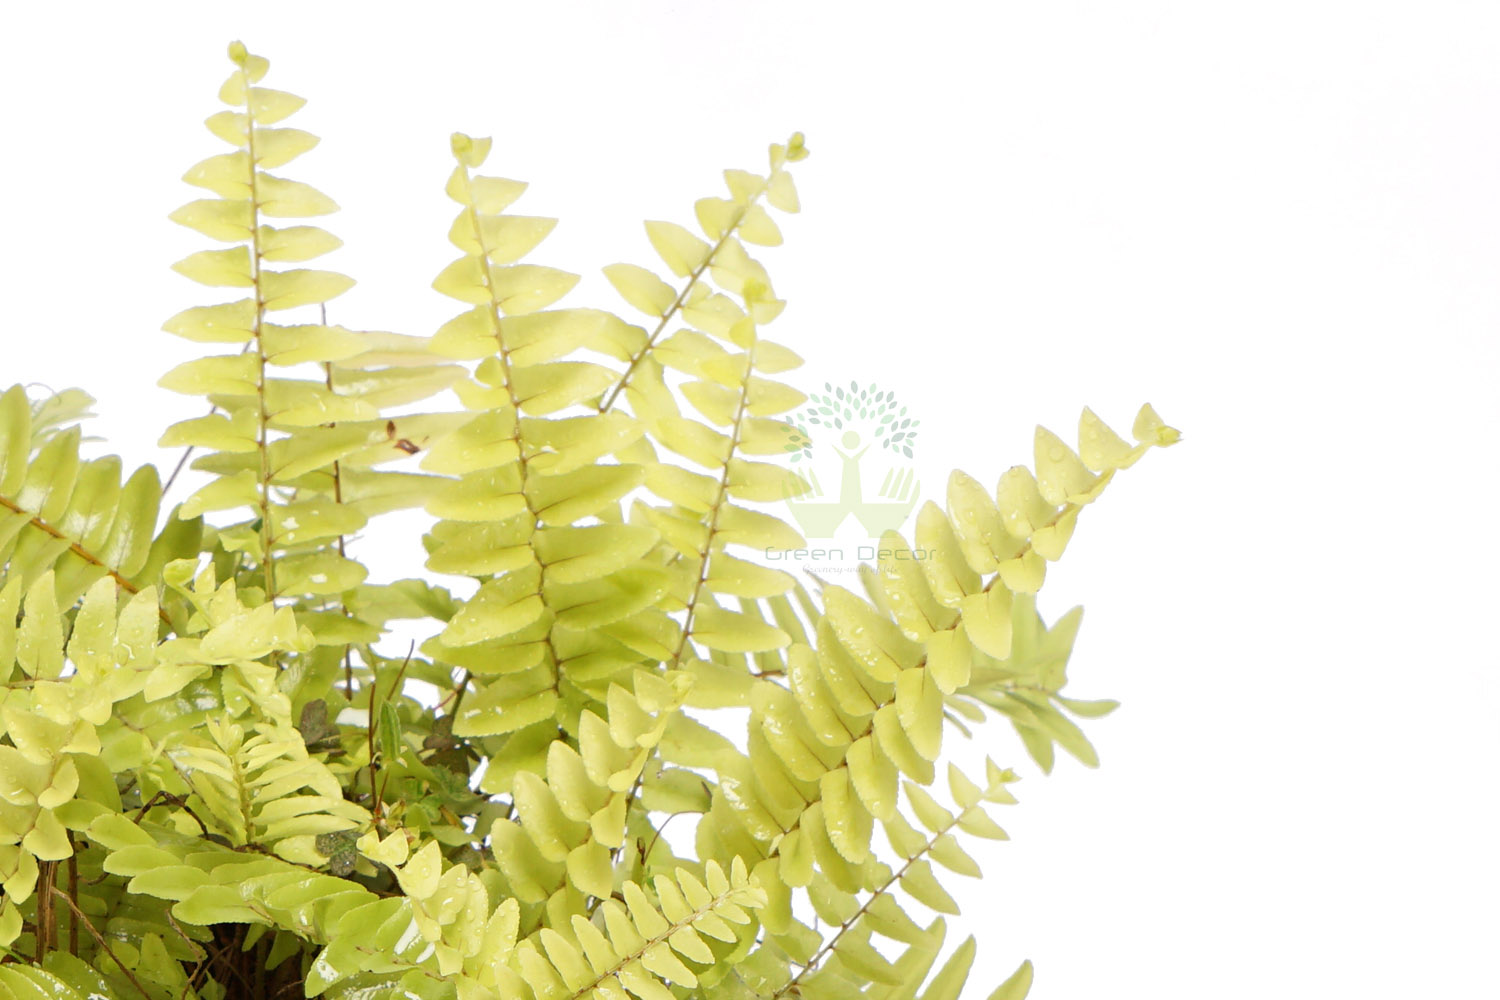 Buy Boston Fern Plants , White Pots and seeds in Delhi NCR by the best online nursery shop Greendecor.